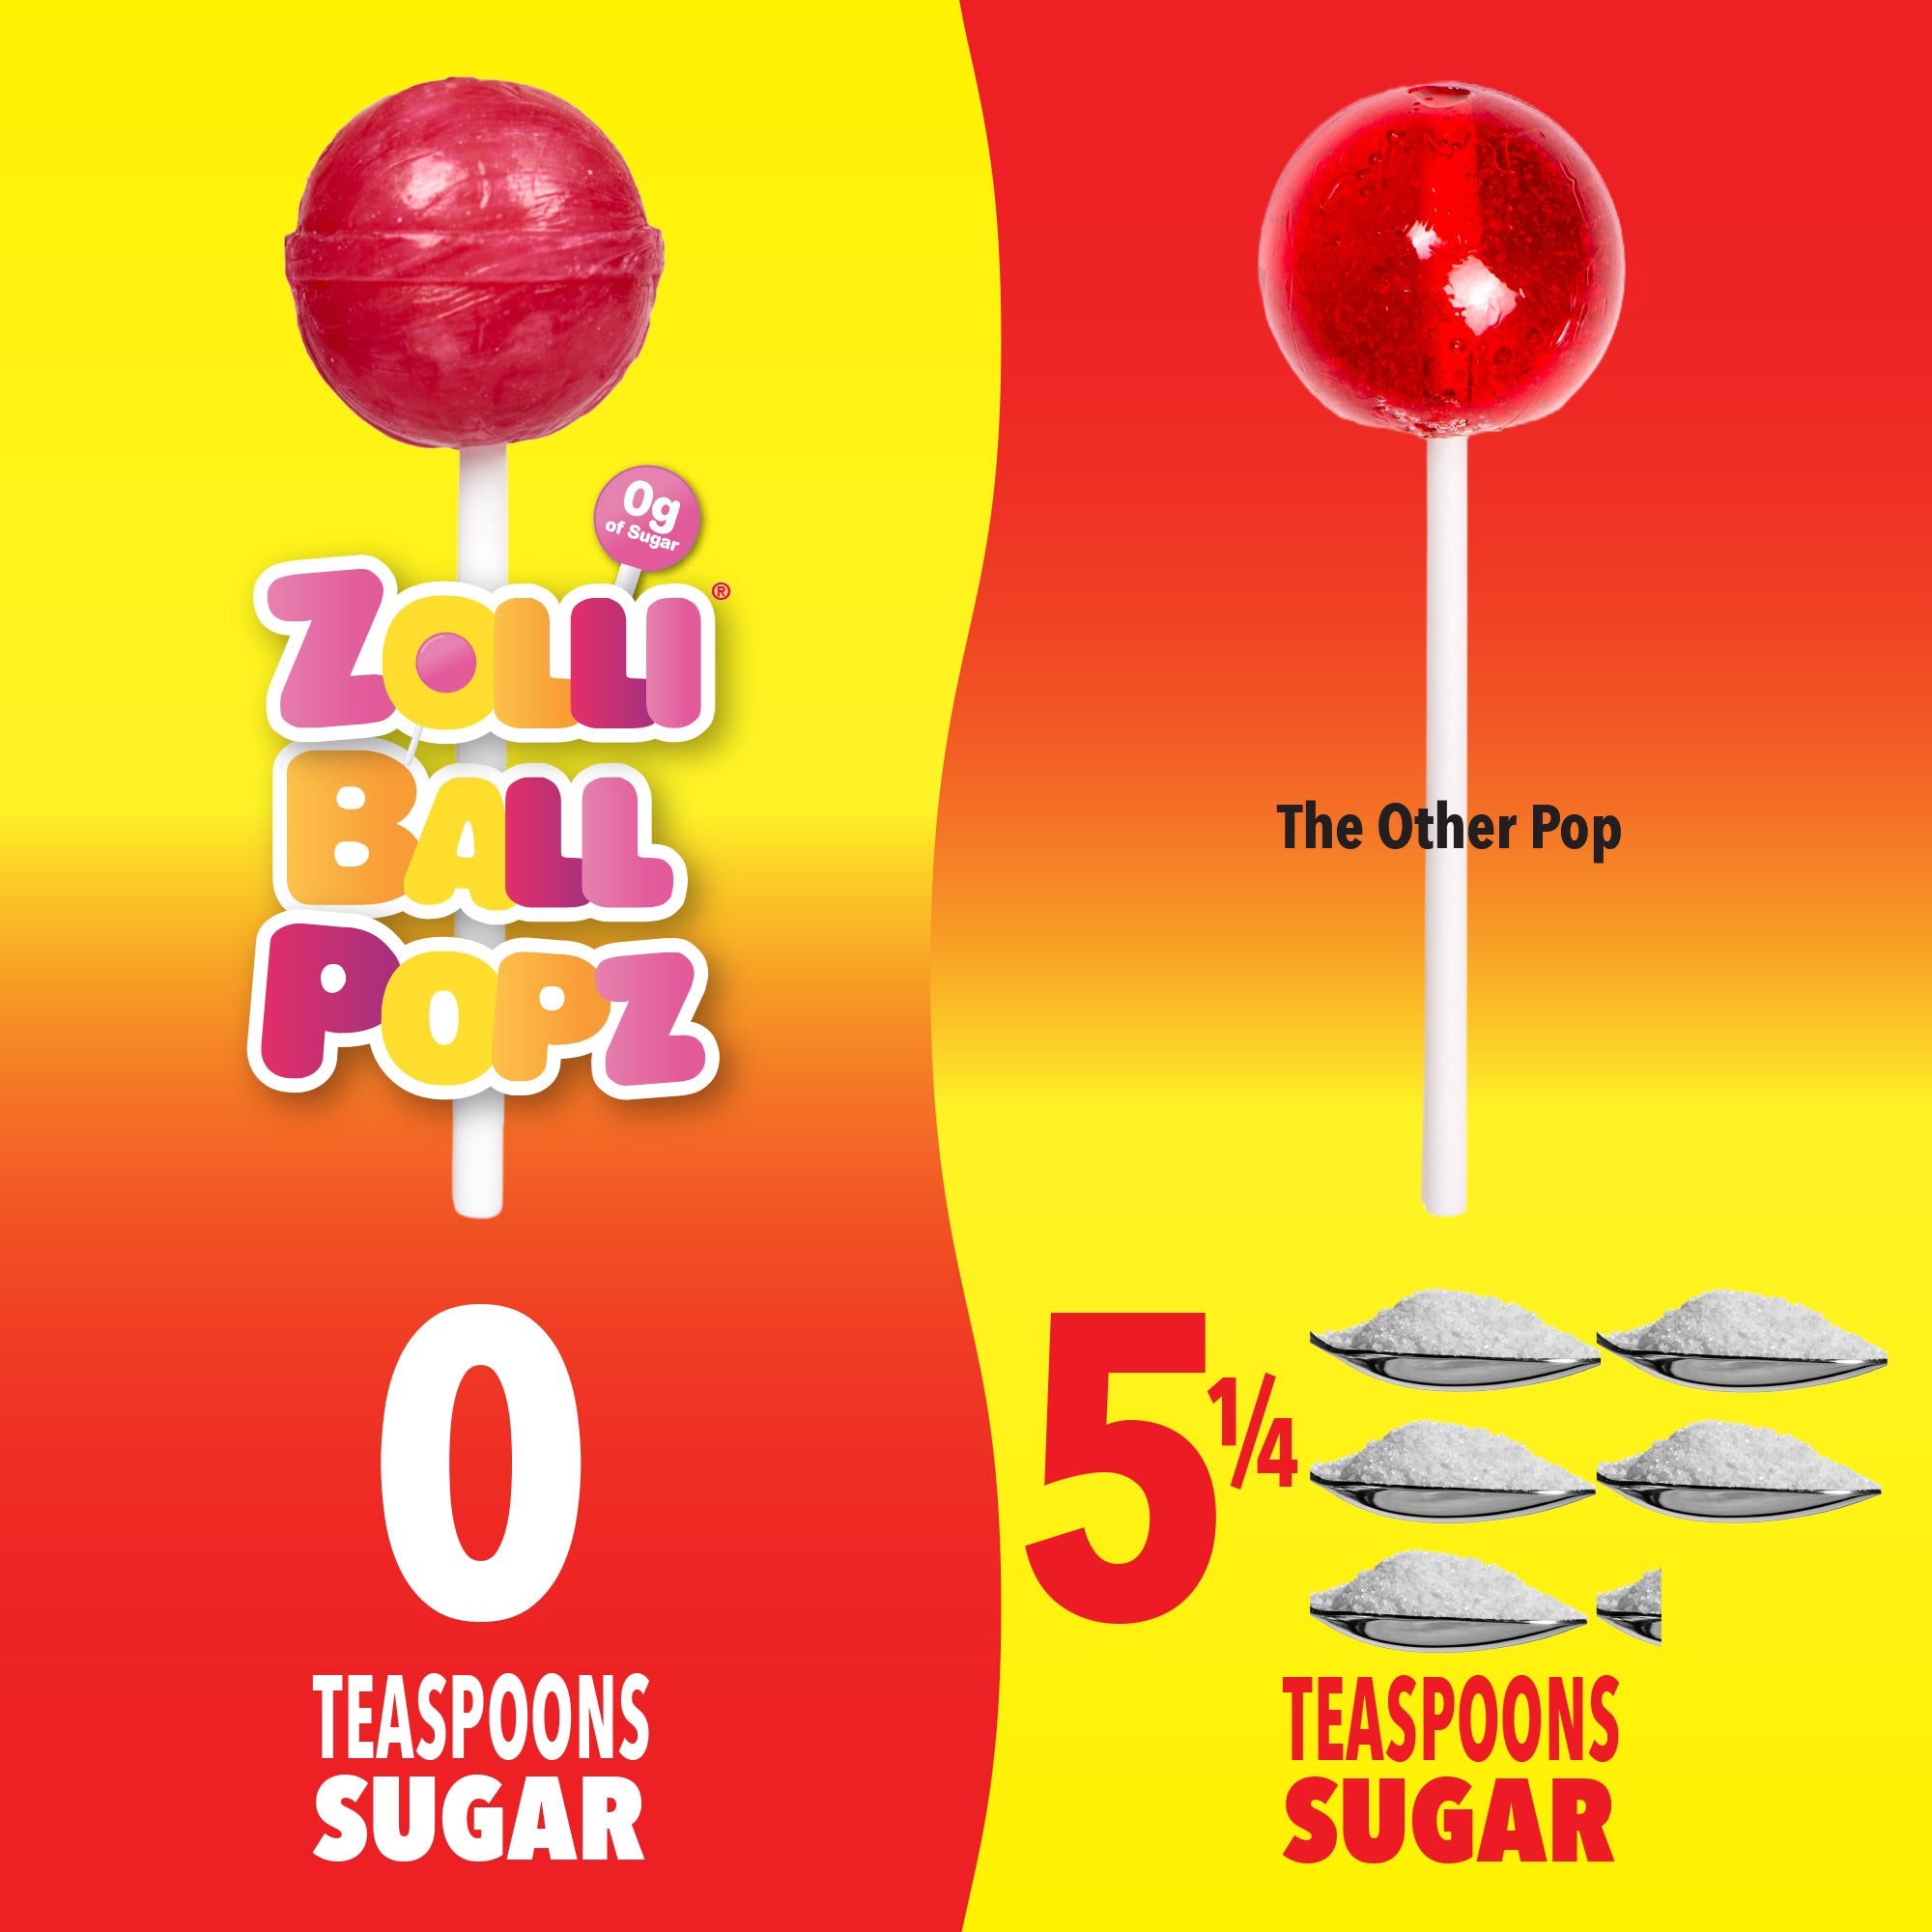 Zolli Ball Popz have zero teaspoons of sugar. Other ball pops have 5 1/4 teaspoon of sugar.